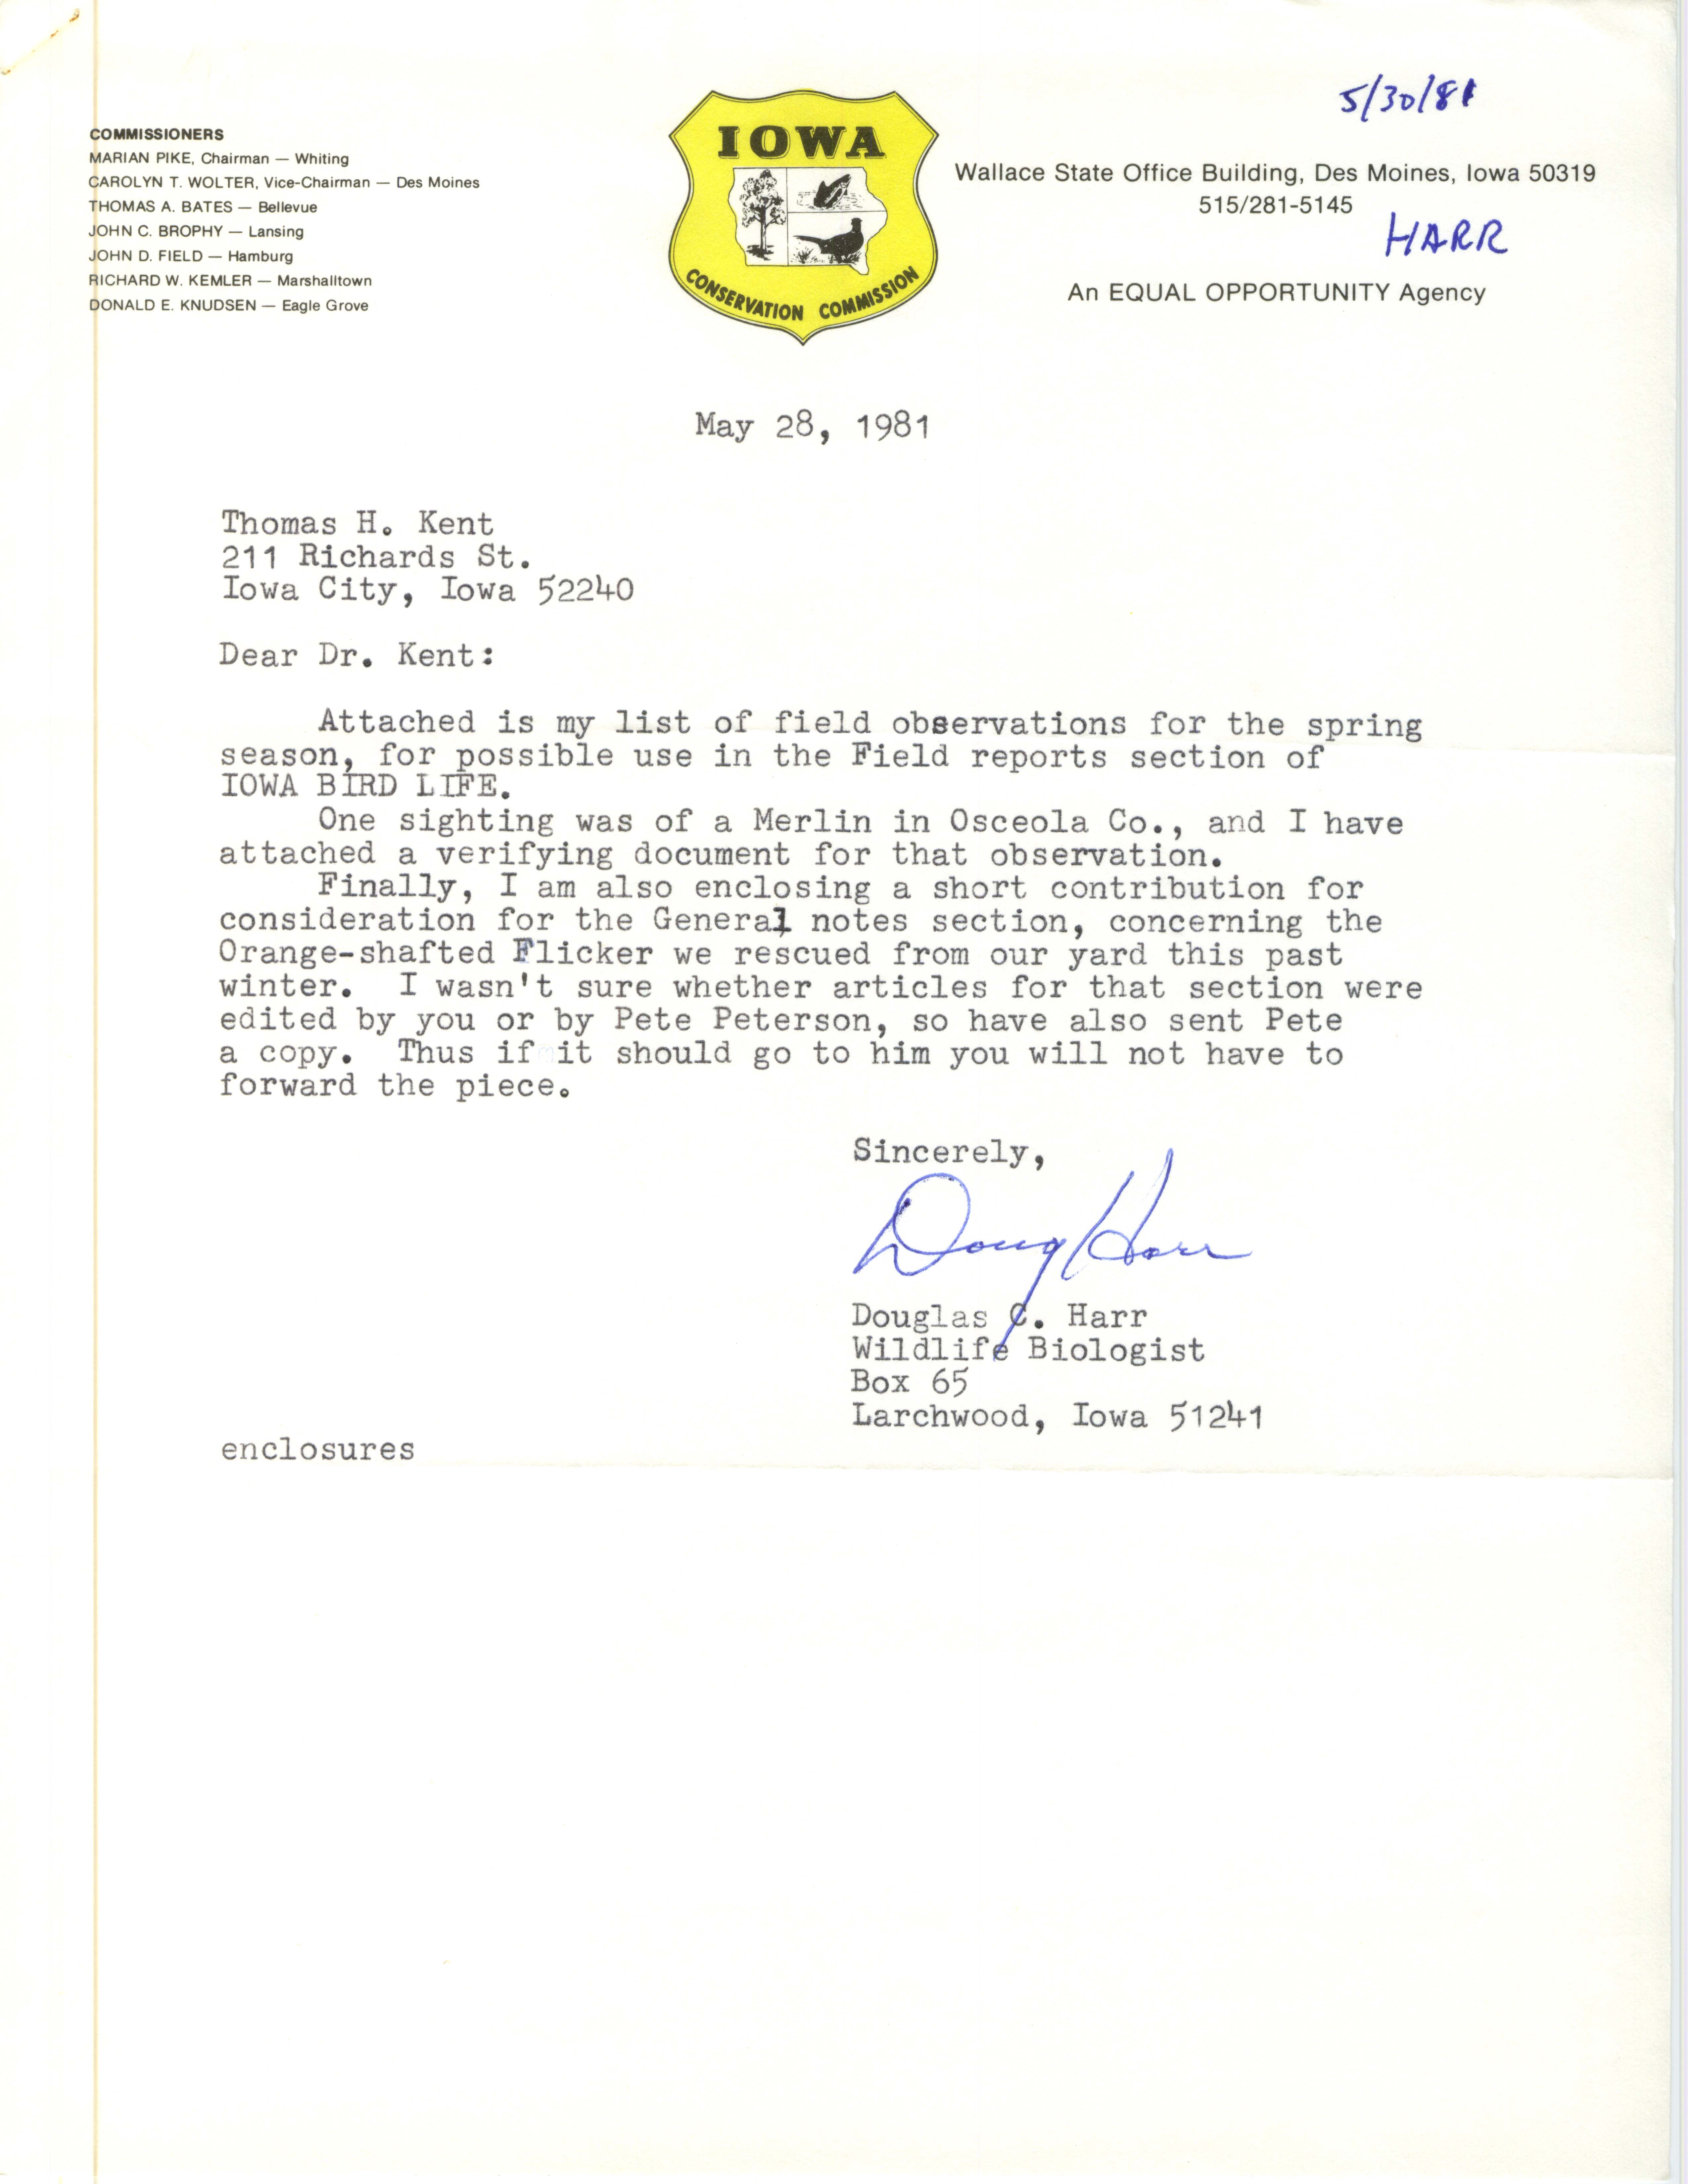 Douglas Harr letter to Thomas Kent regarding spring field observations, May 28, 1981